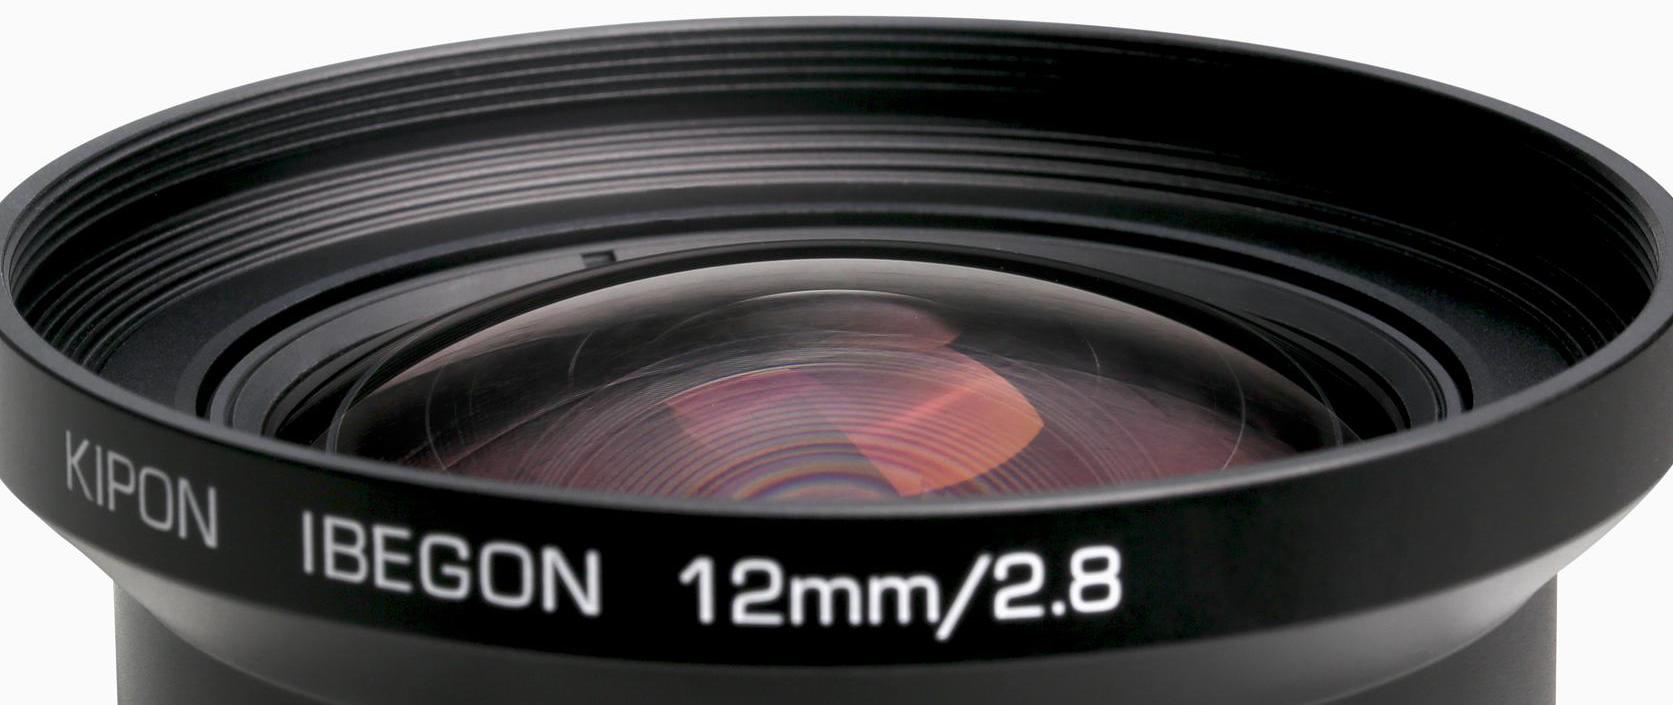 Kipon-12mm-f2.8-super-wide-angle-lens-for-APS-C-mirrorless-cameras-4.jpg